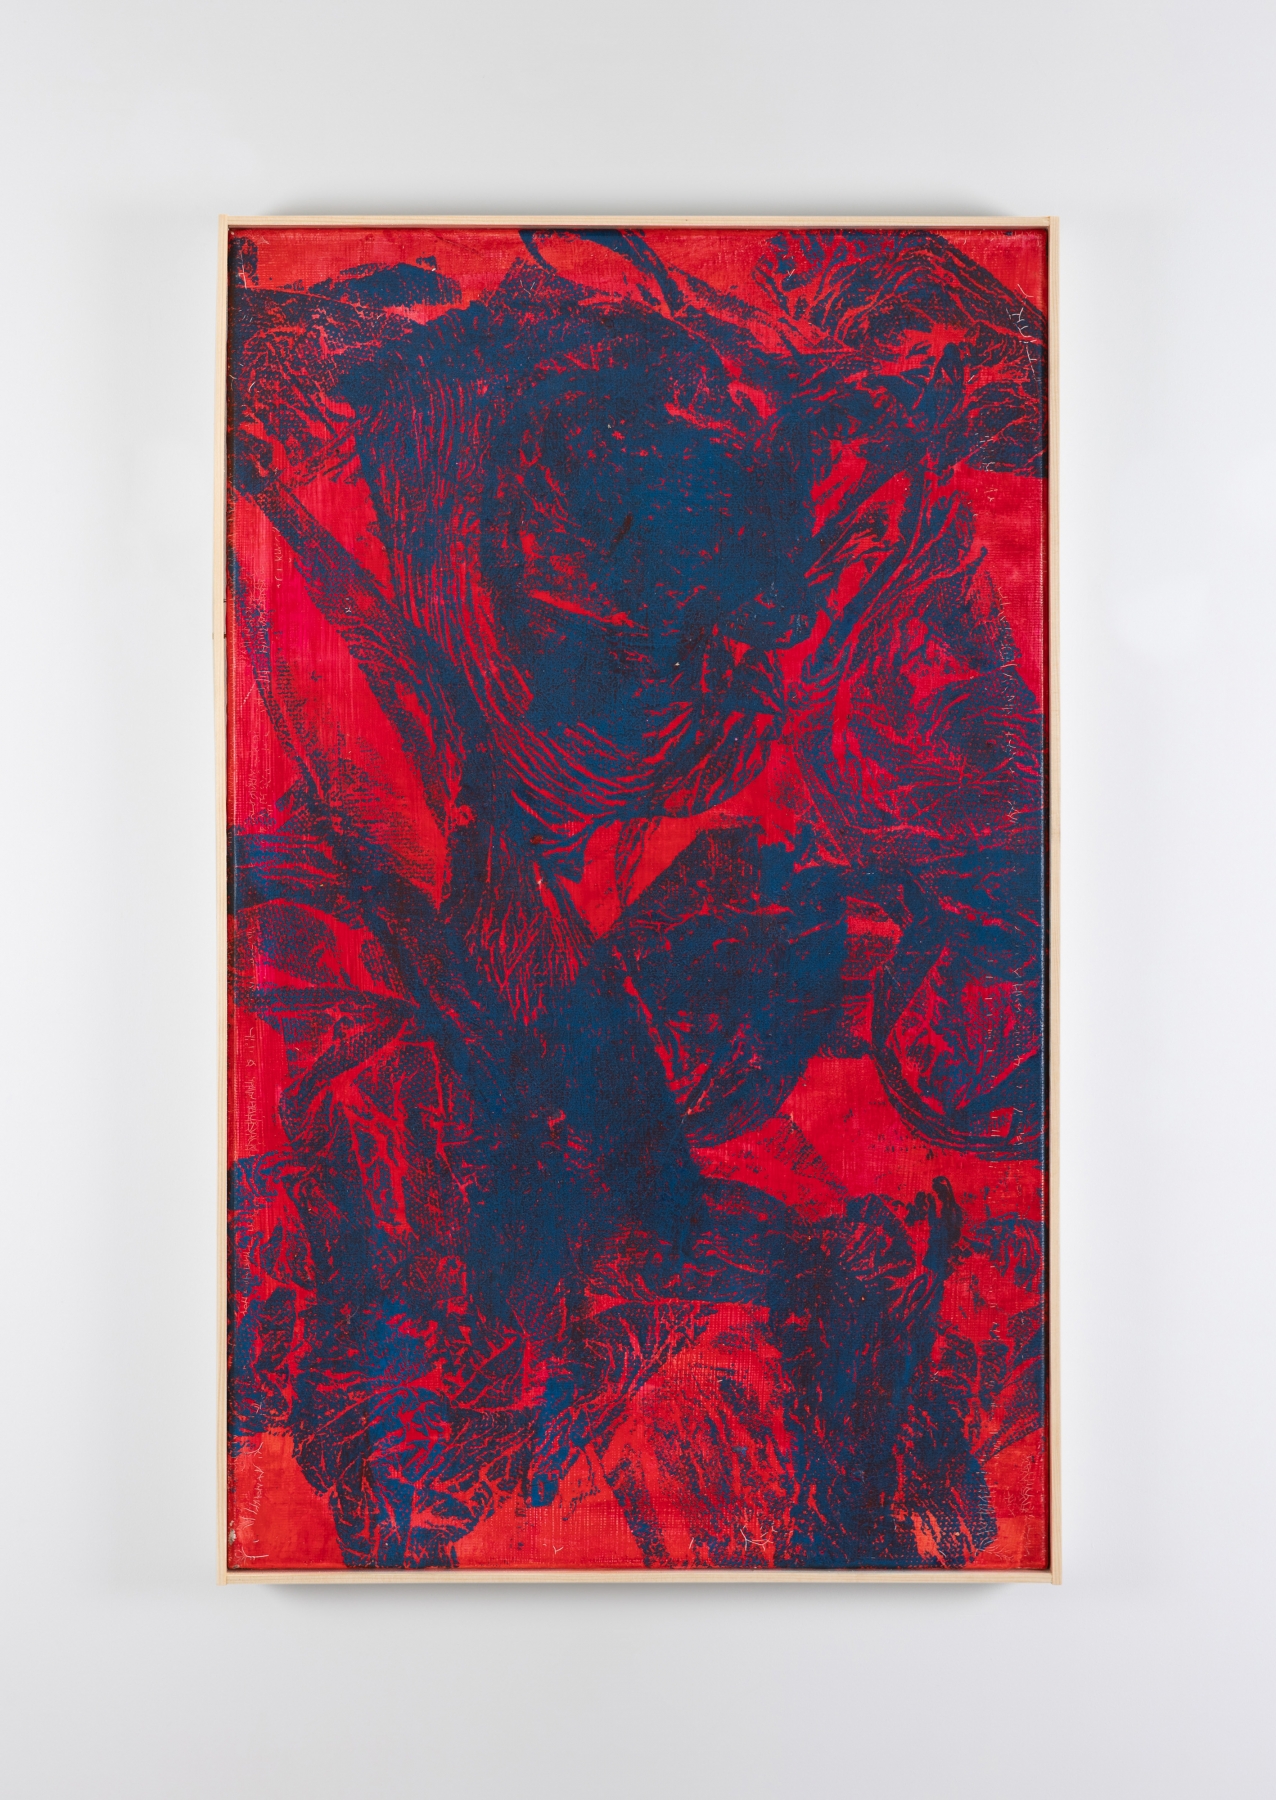 Jan Pleitner
Untitled,&nbsp;2021
oil on canvas
63.2 x 39.5 x 3 cm / 24.9 x 15.6 x 1.2 in framed
&nbsp;